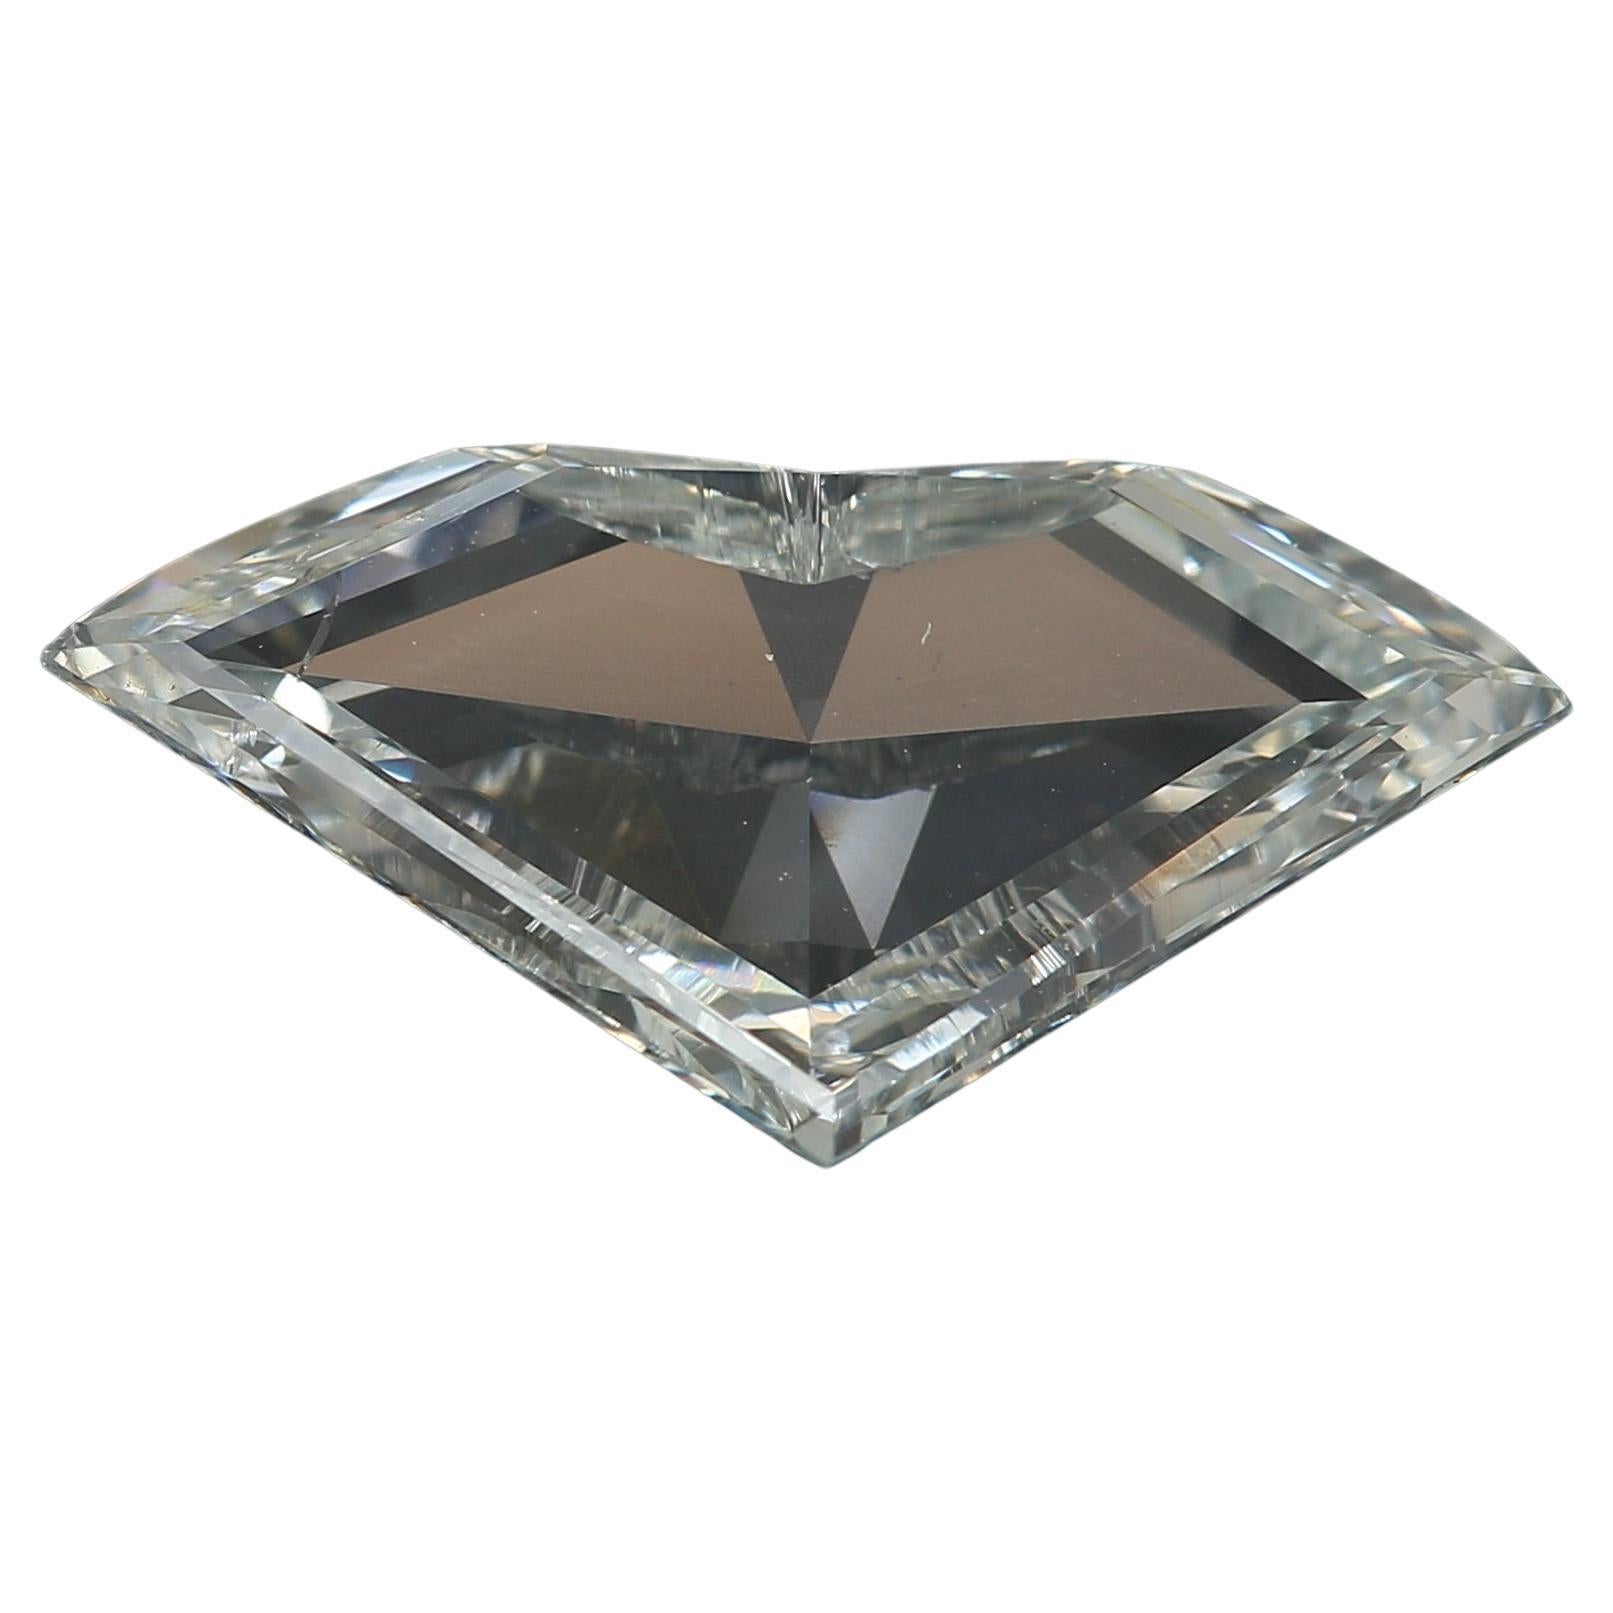 2.24 Carat Shield Cut Diamond I1 Clarity GIA Certified For Sale